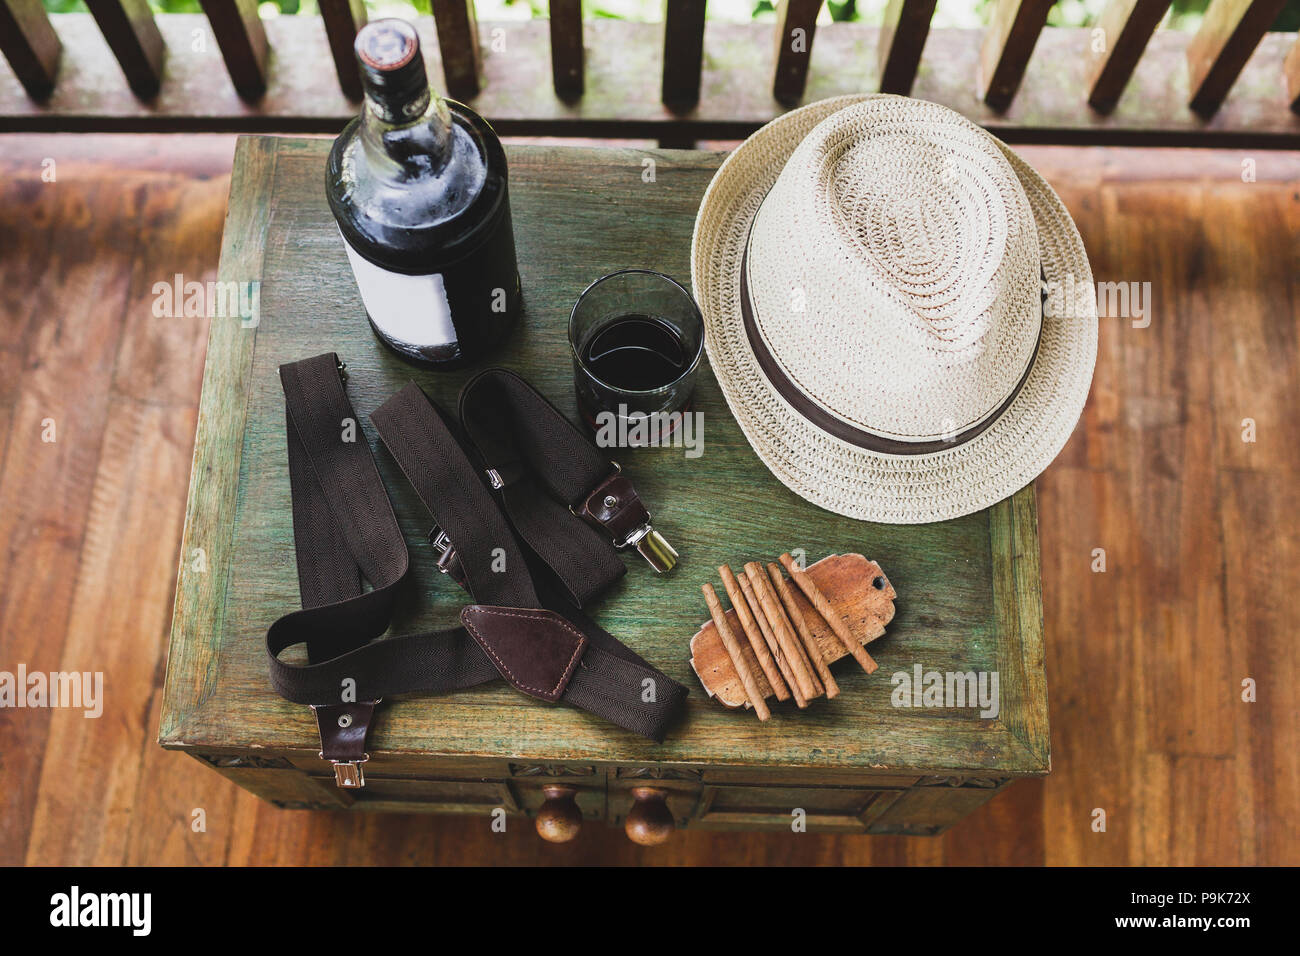 Old Cuban Men Smoke Cigars Banque d'image et photos - Alamy